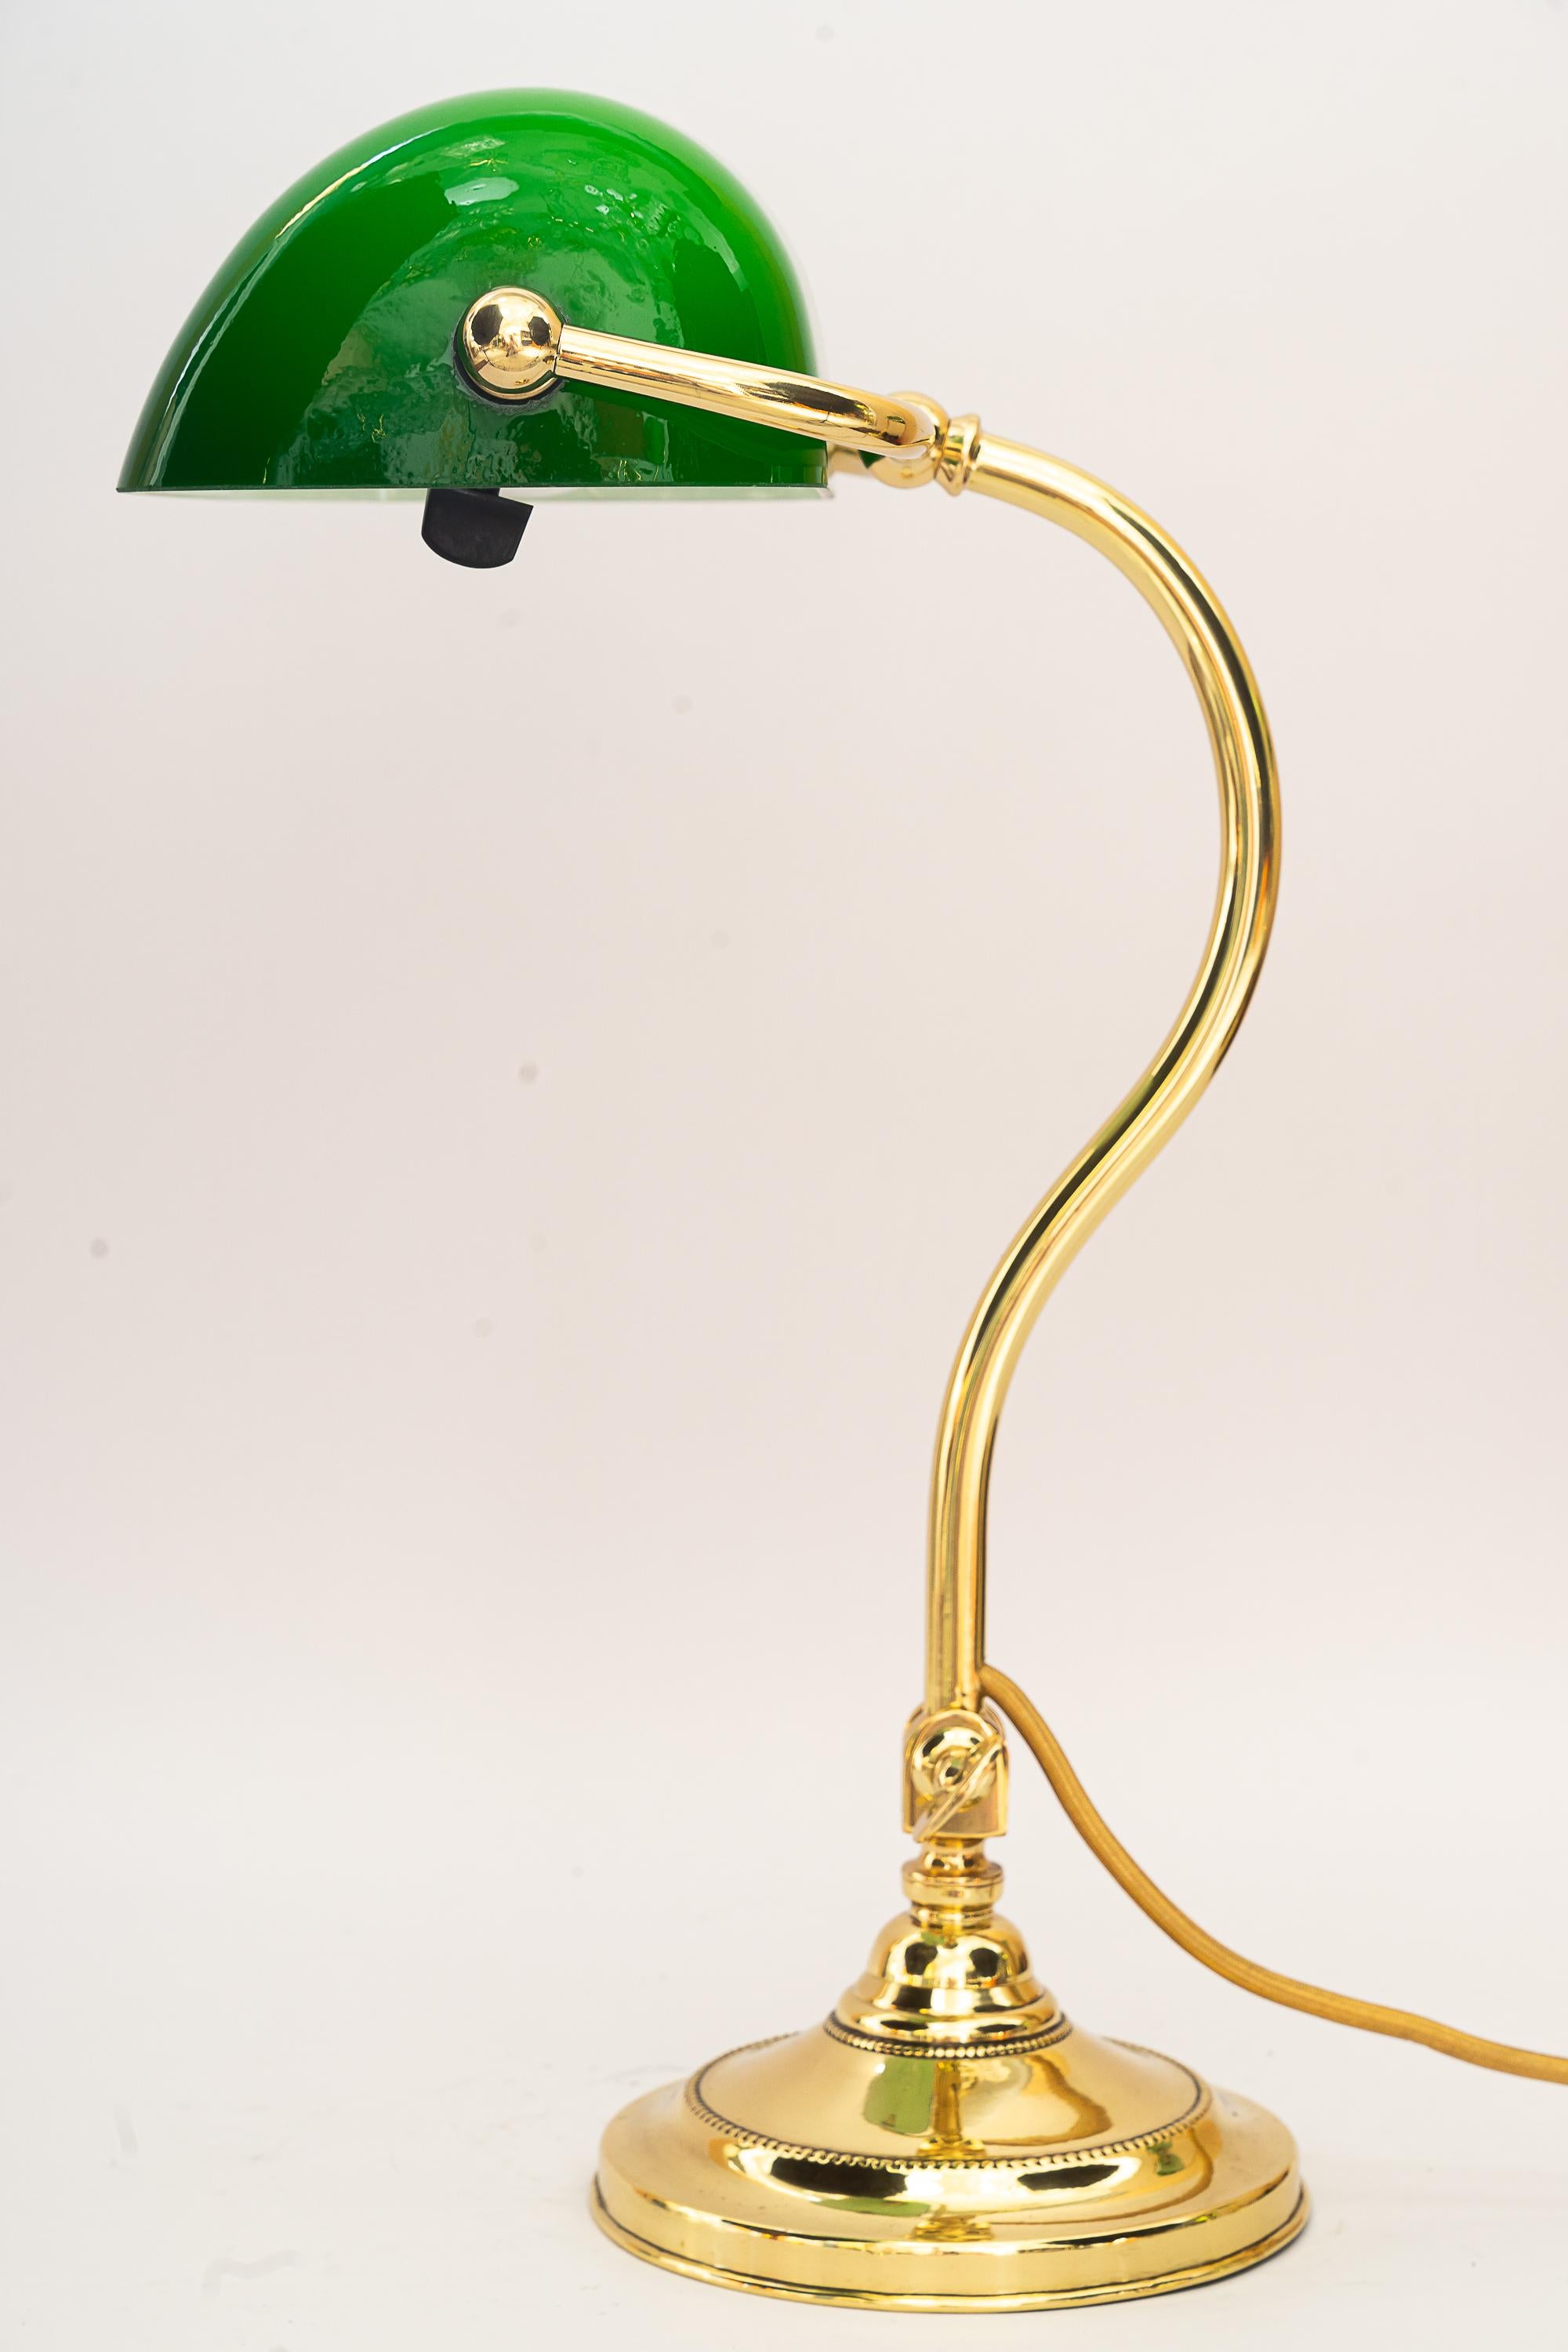 Austrian Adjustable Banker lamp around 1920s